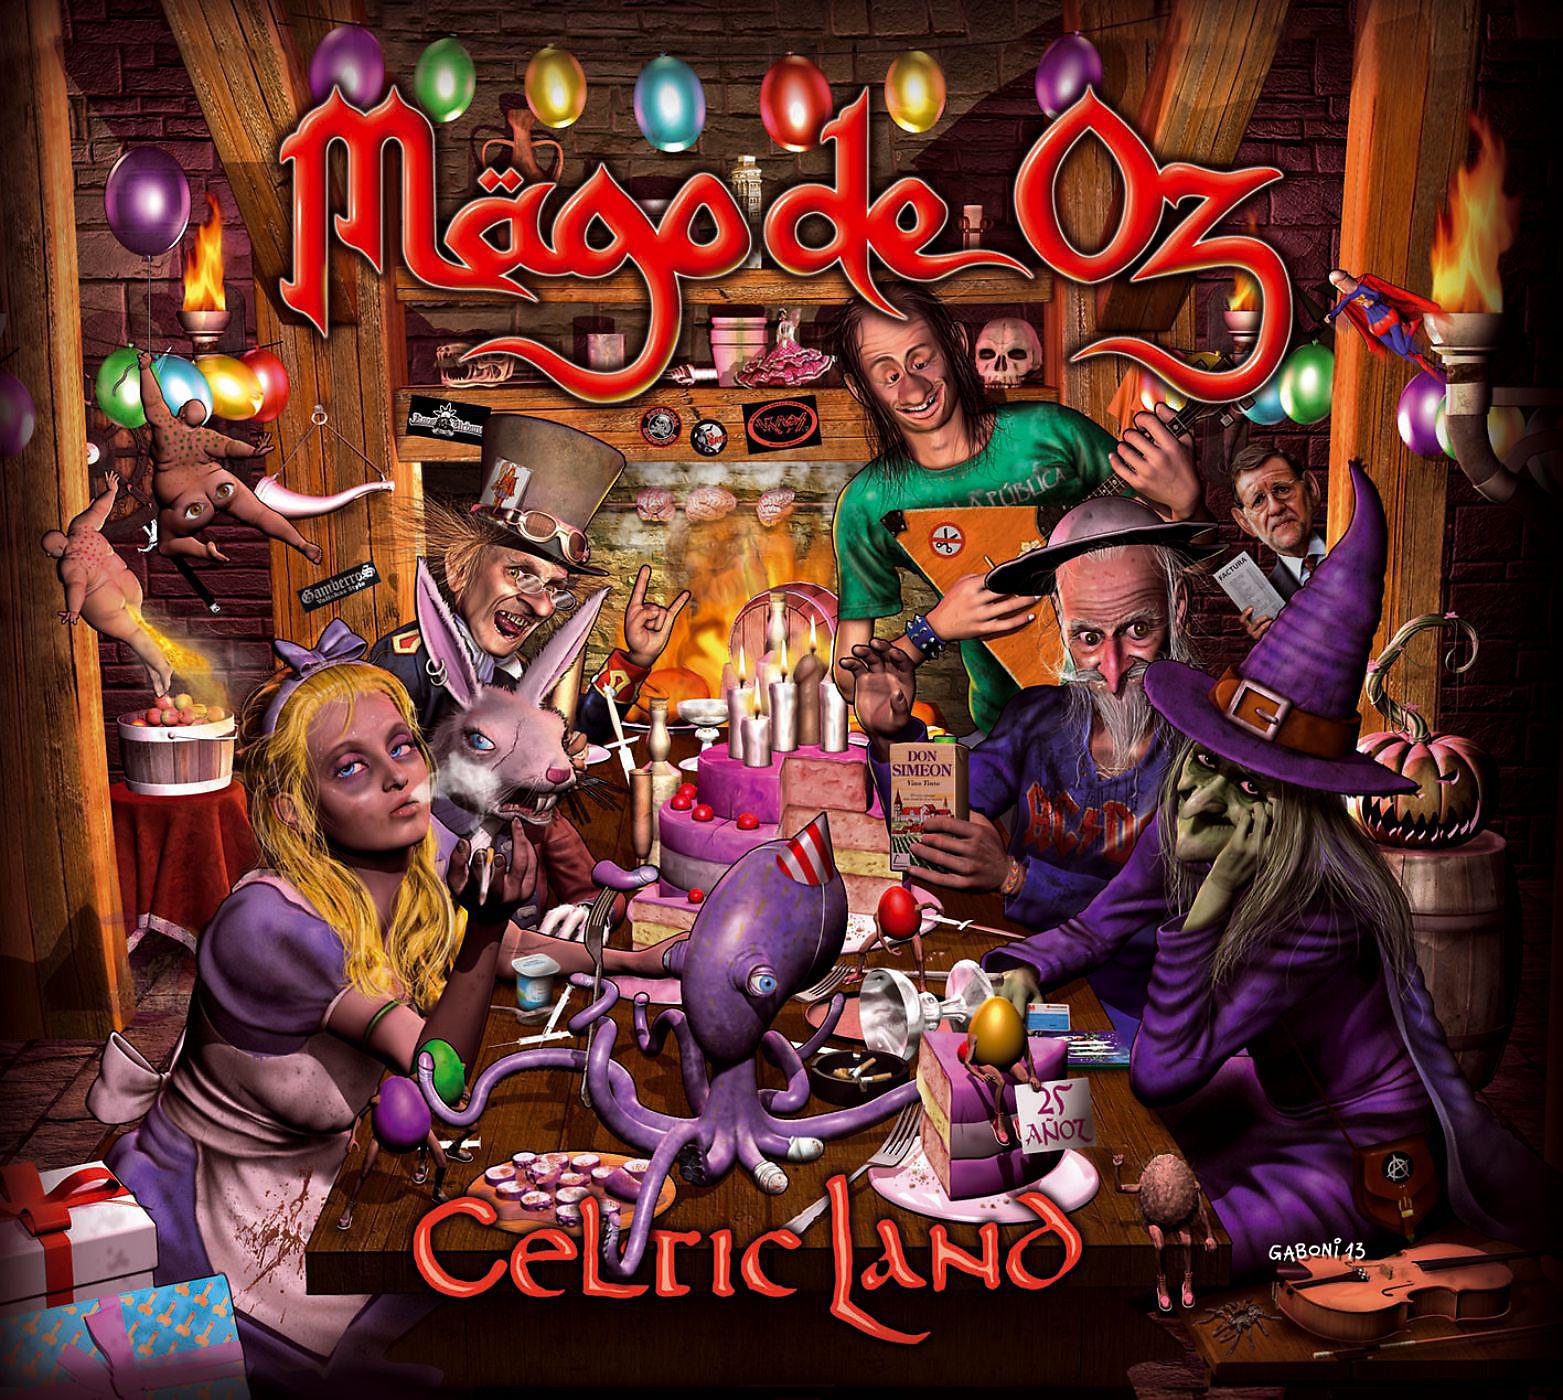 Mago de oz. Группа Mägo de oz. Mago de oz Celtic Land. Mago de oz обложки альбомов. Mega de oz.